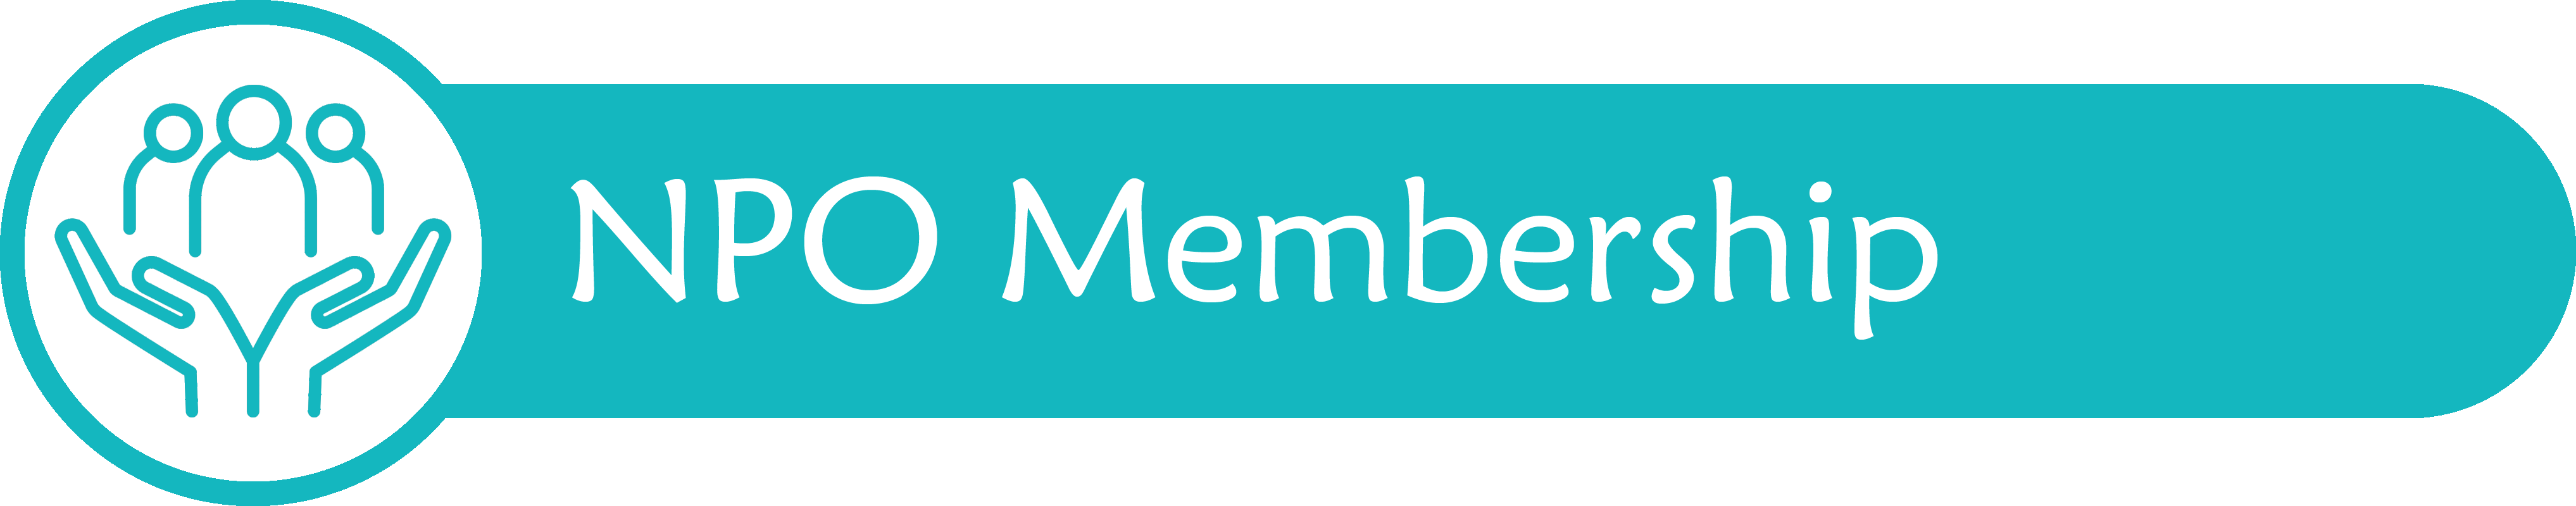 npo-membership.png